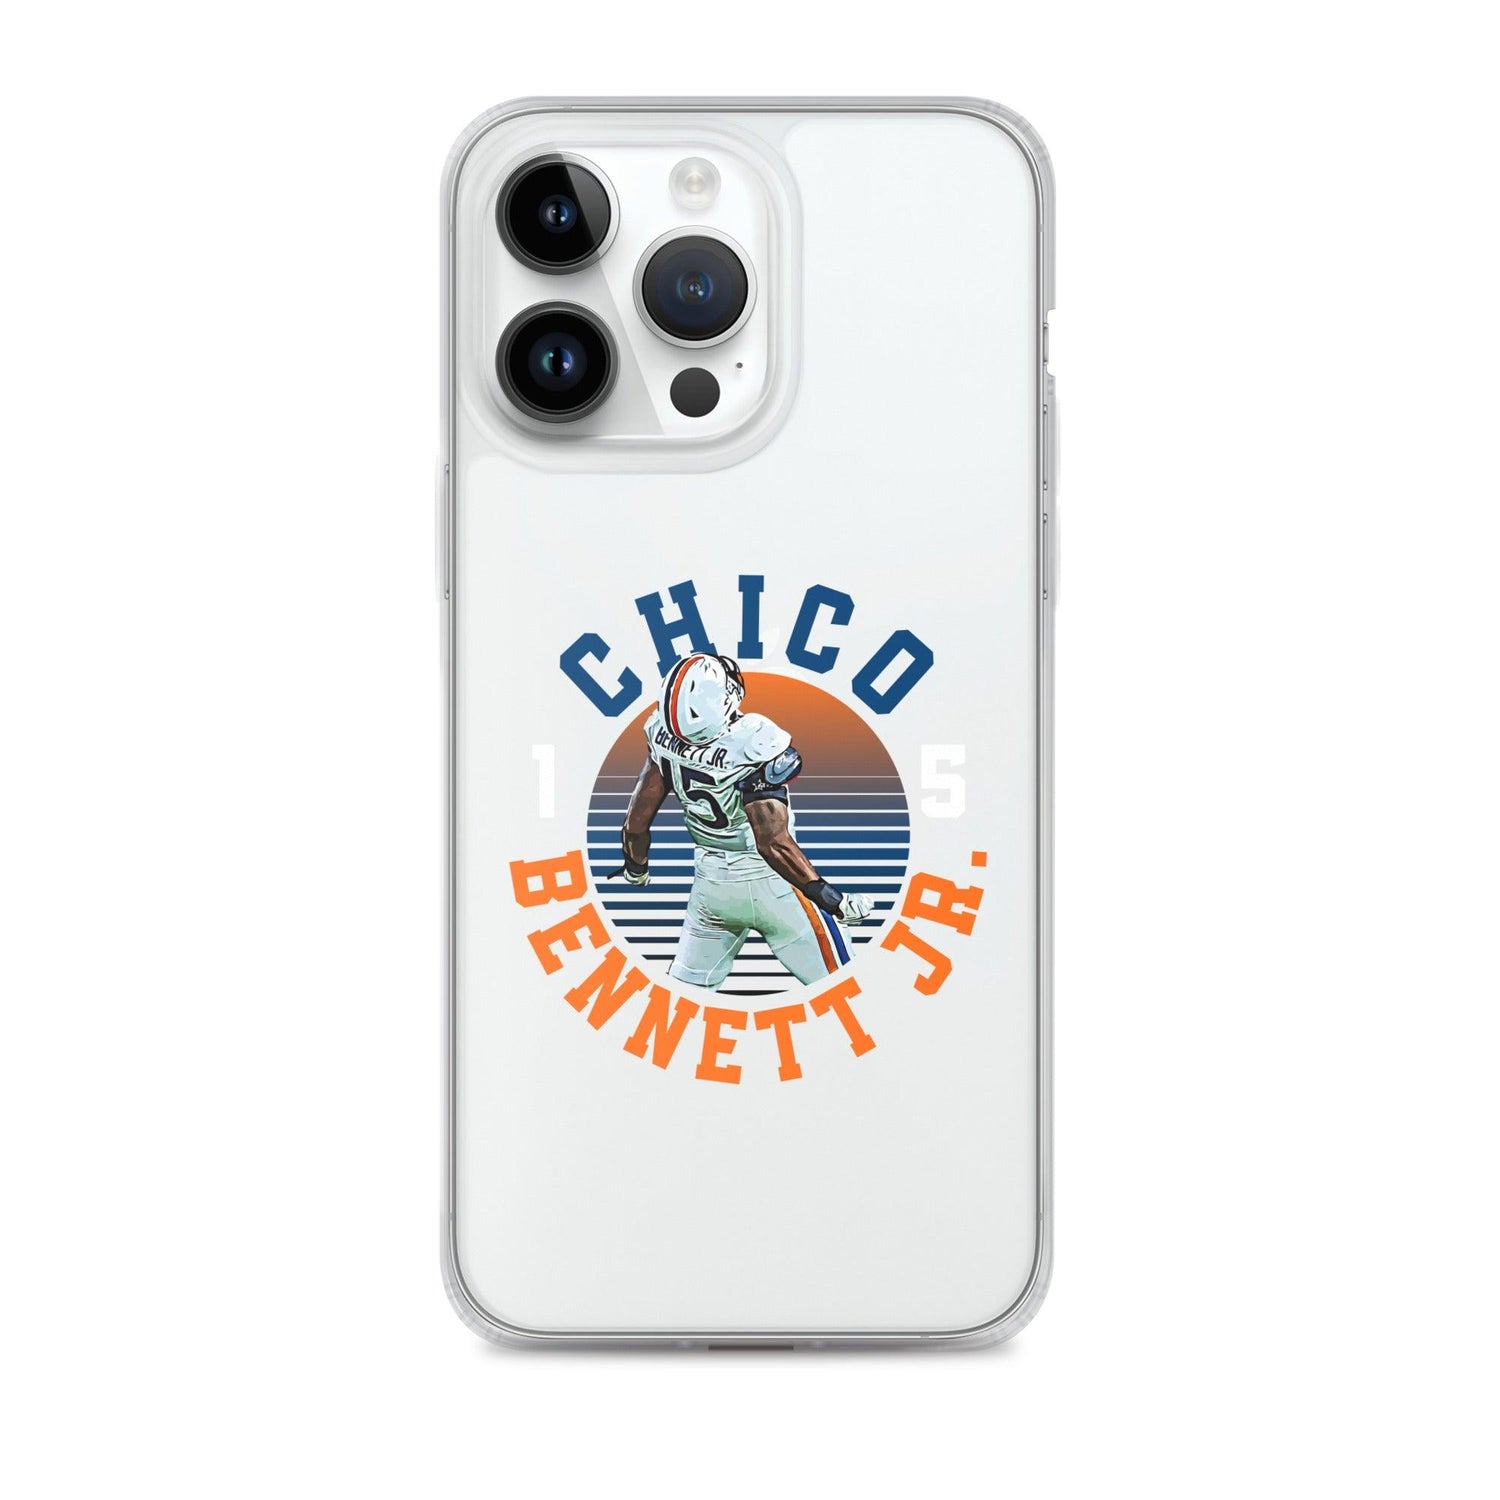 Chico Bennett Jr. "Gameday" iPhone® - Fan Arch